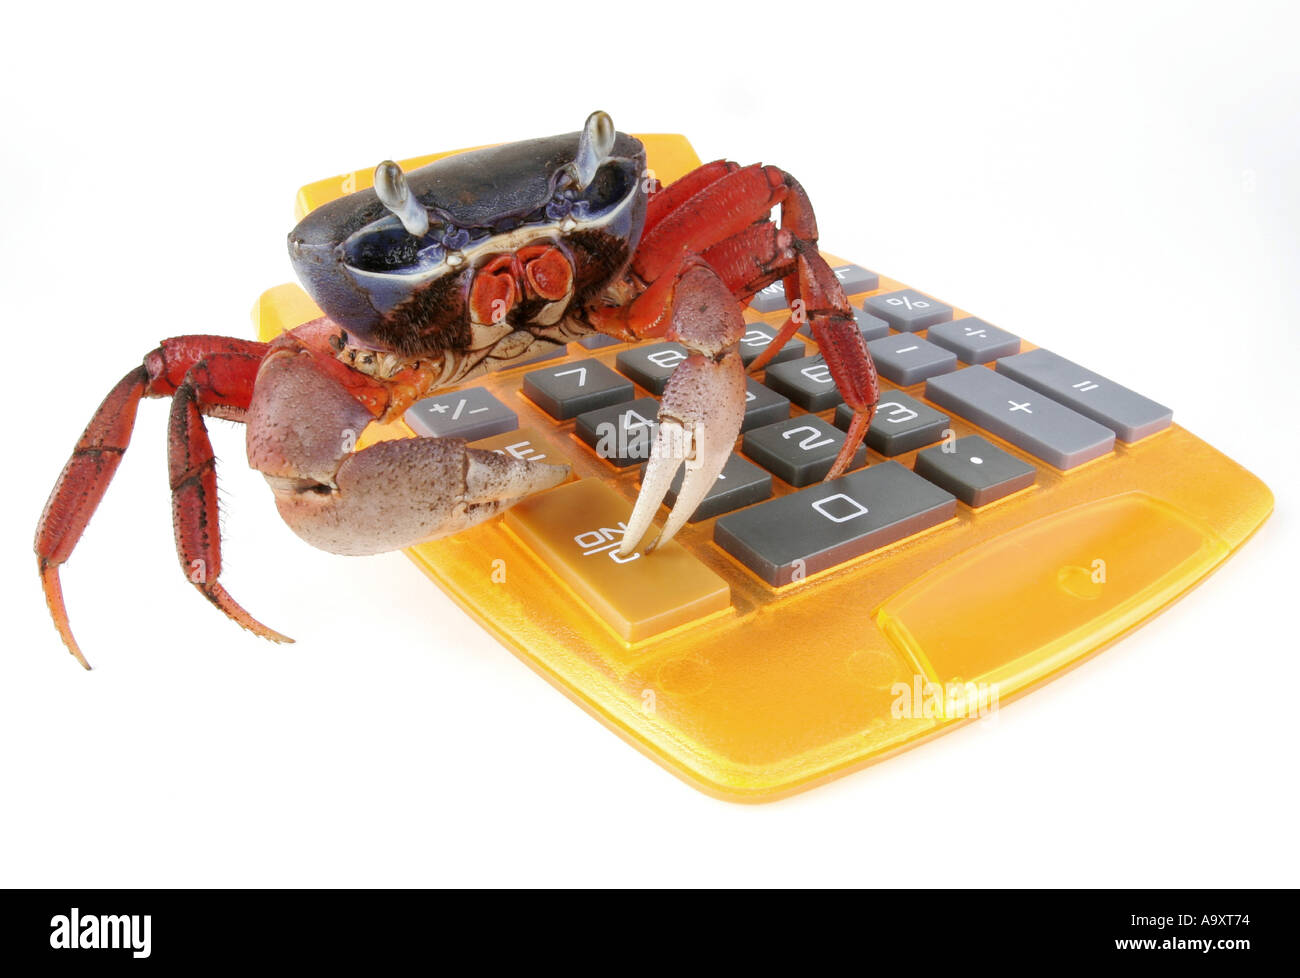 rainbow crab, West African rainbow crab (Cardisoma armatum), with pocket calculator. Stock Photo